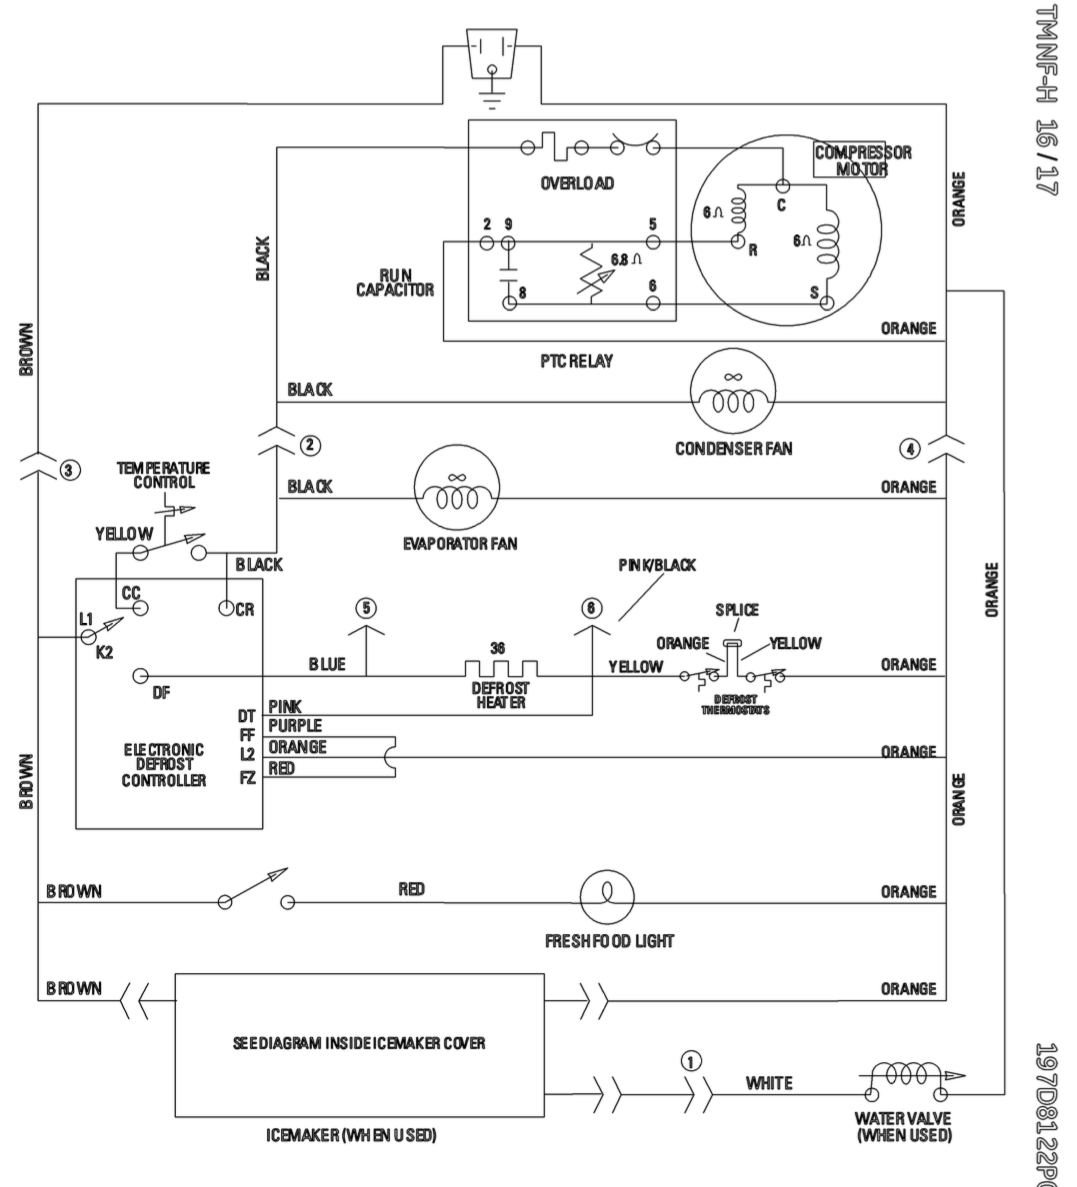 [DIAGRAM] Electrical Wiring Diagram Ge Refrigerator - MYDIAGRAM.ONLINE